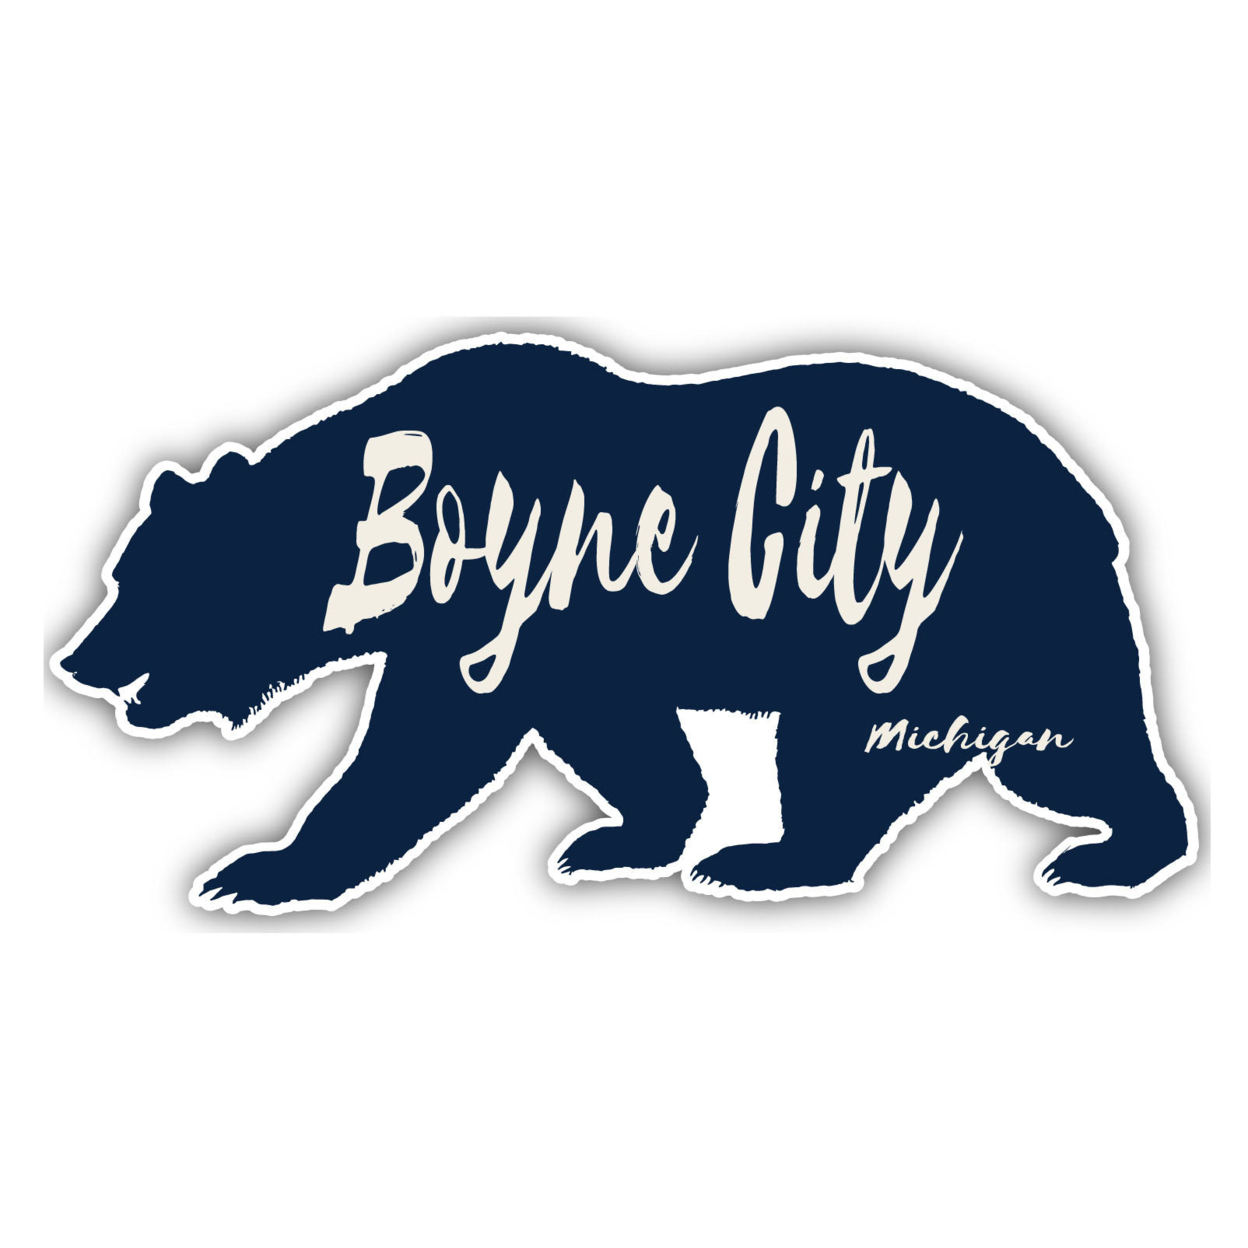 Boyne City Michigan Souvenir Decorative Stickers (Choose Theme And Size) - 4-Pack, 8-Inch, Bear